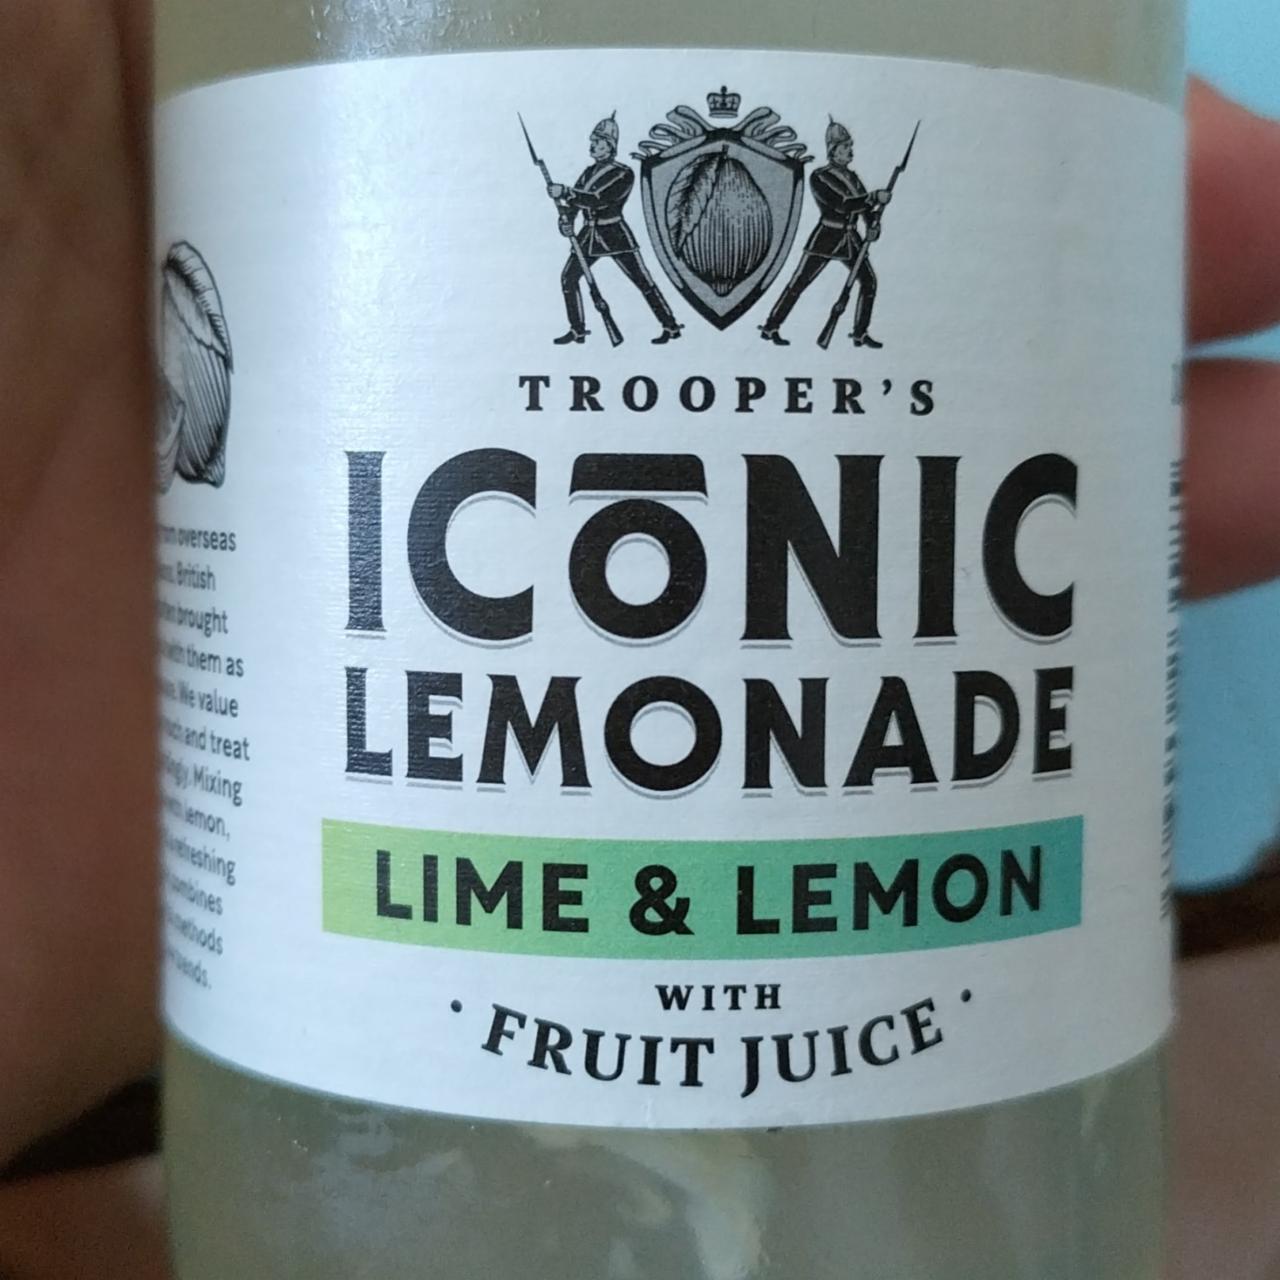 Fotografie - iconic lemonade lime & lemon with fruit juice